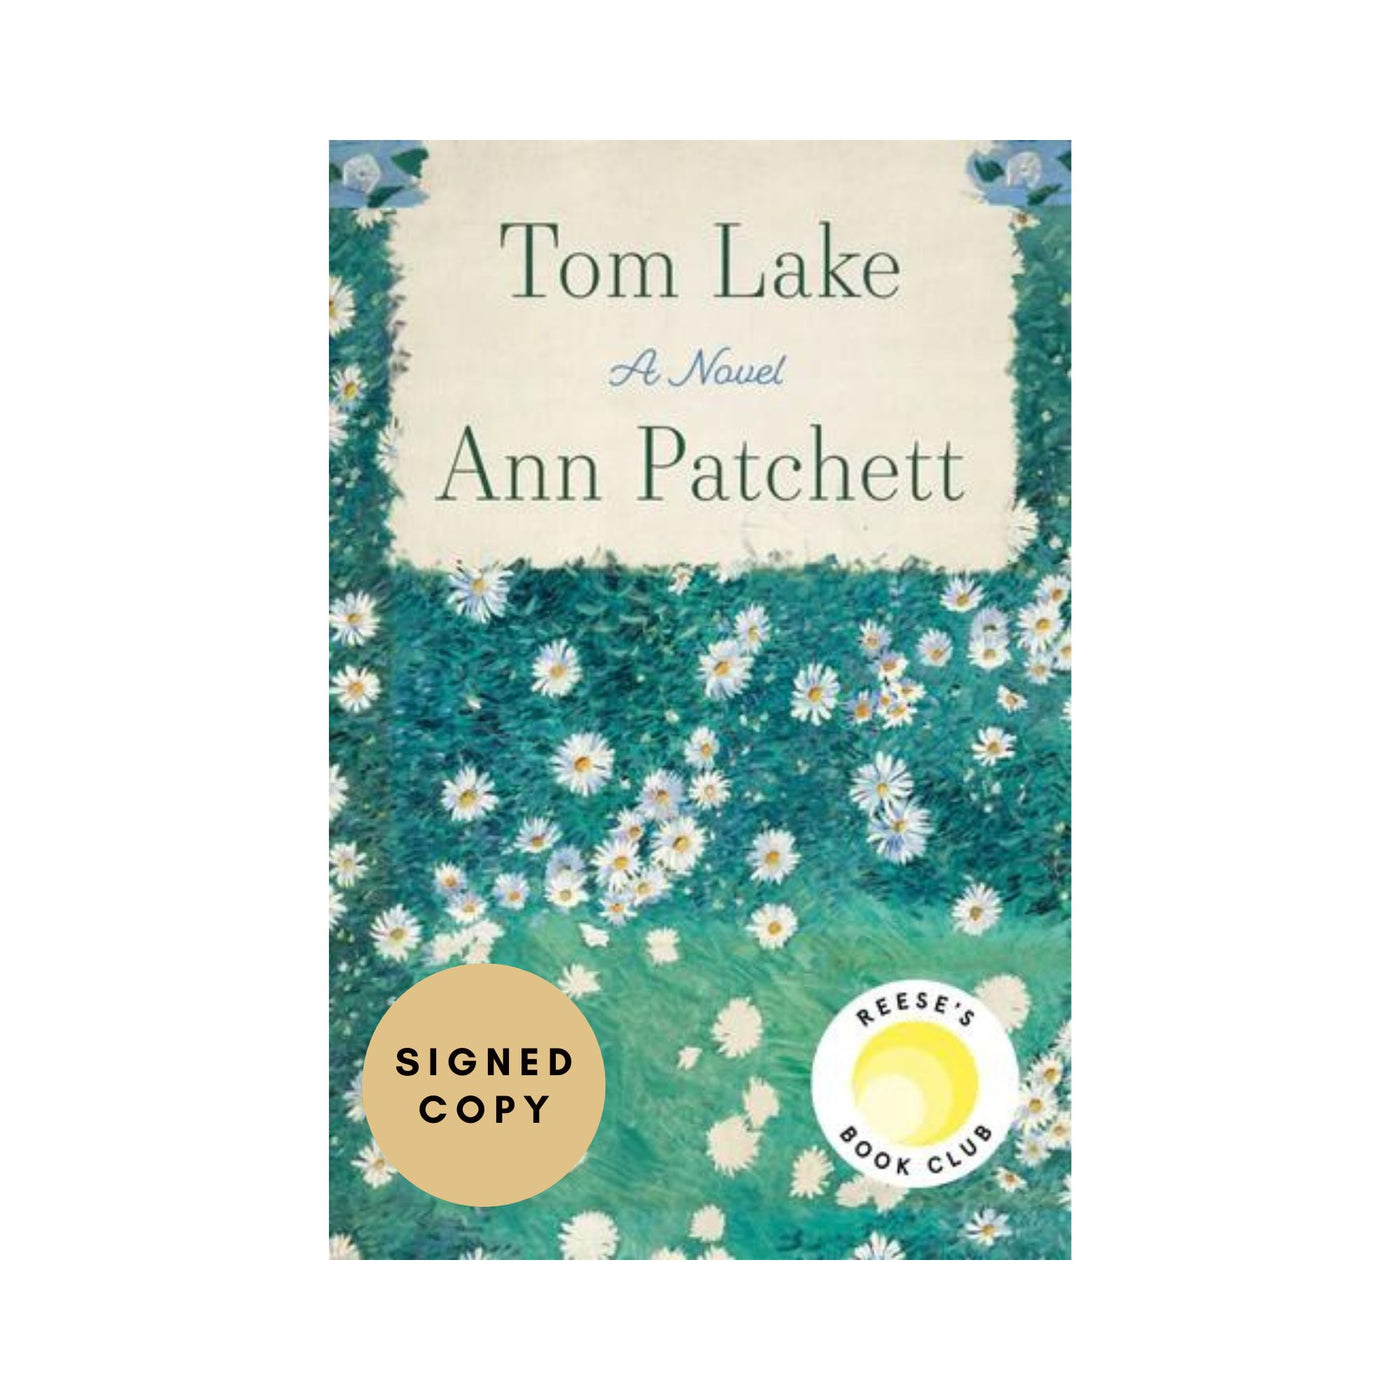 Tom Lake by Ann Patchett (Signed Copy)